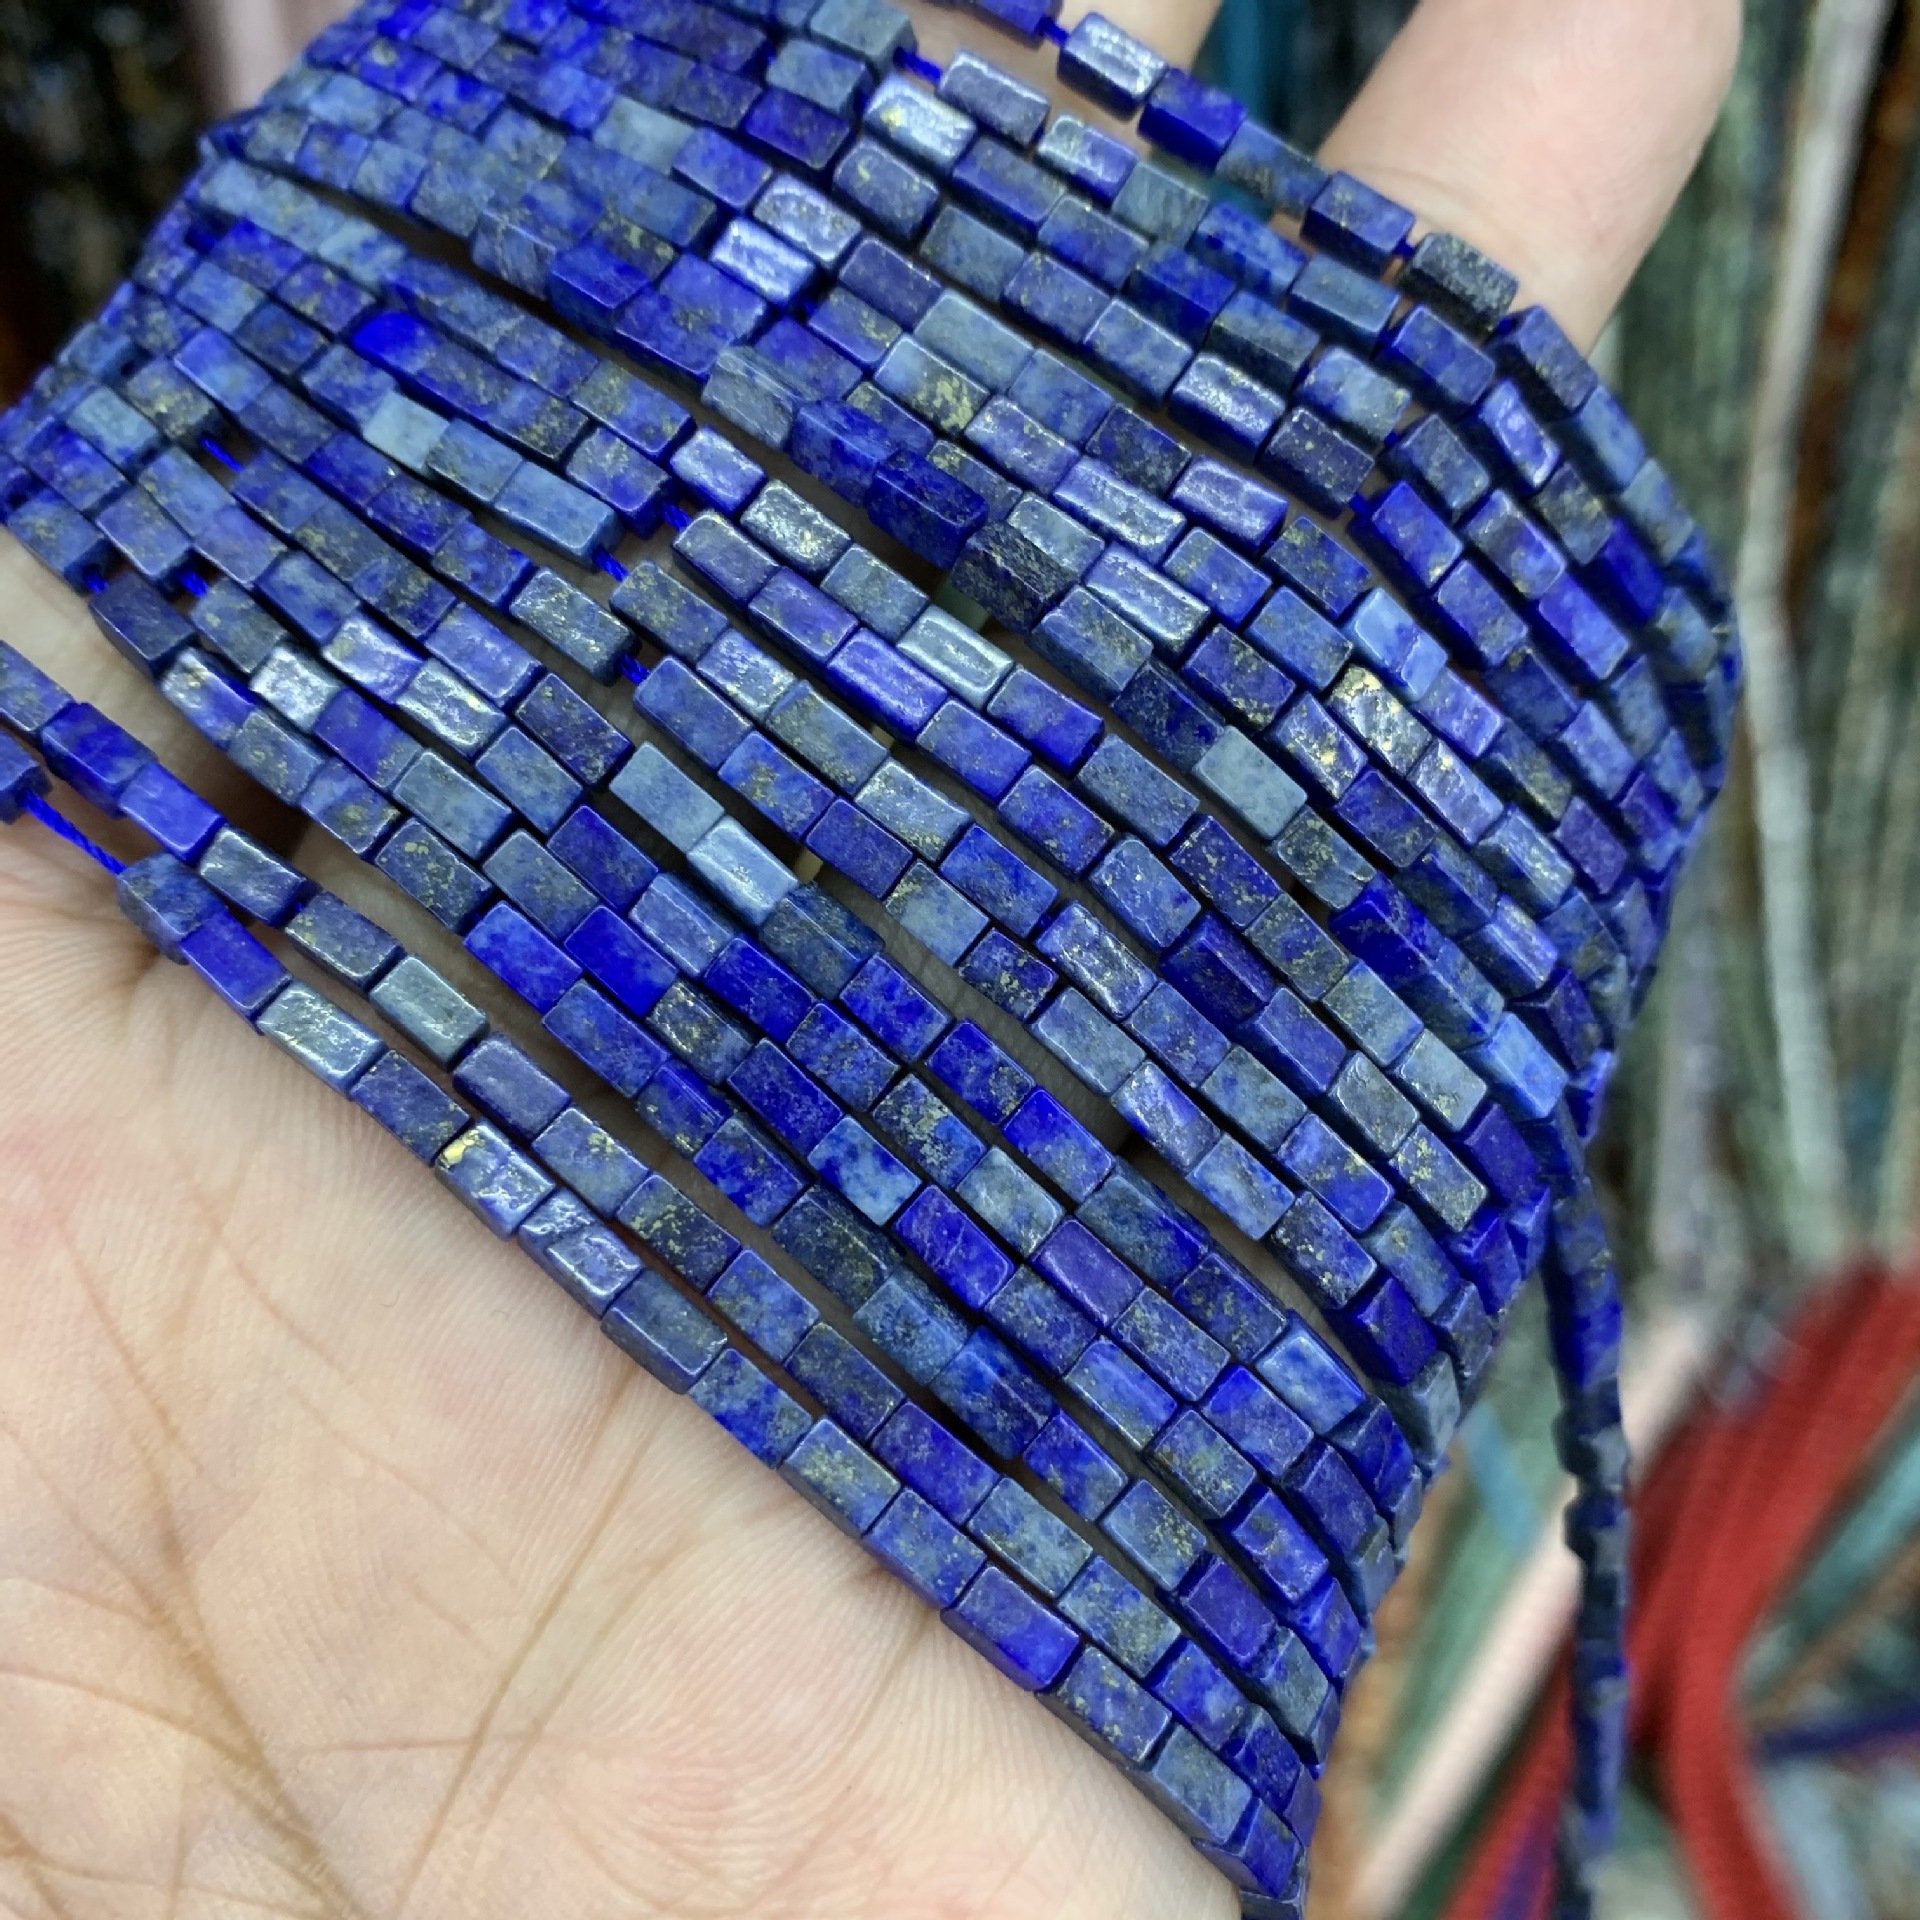 8:lazulite